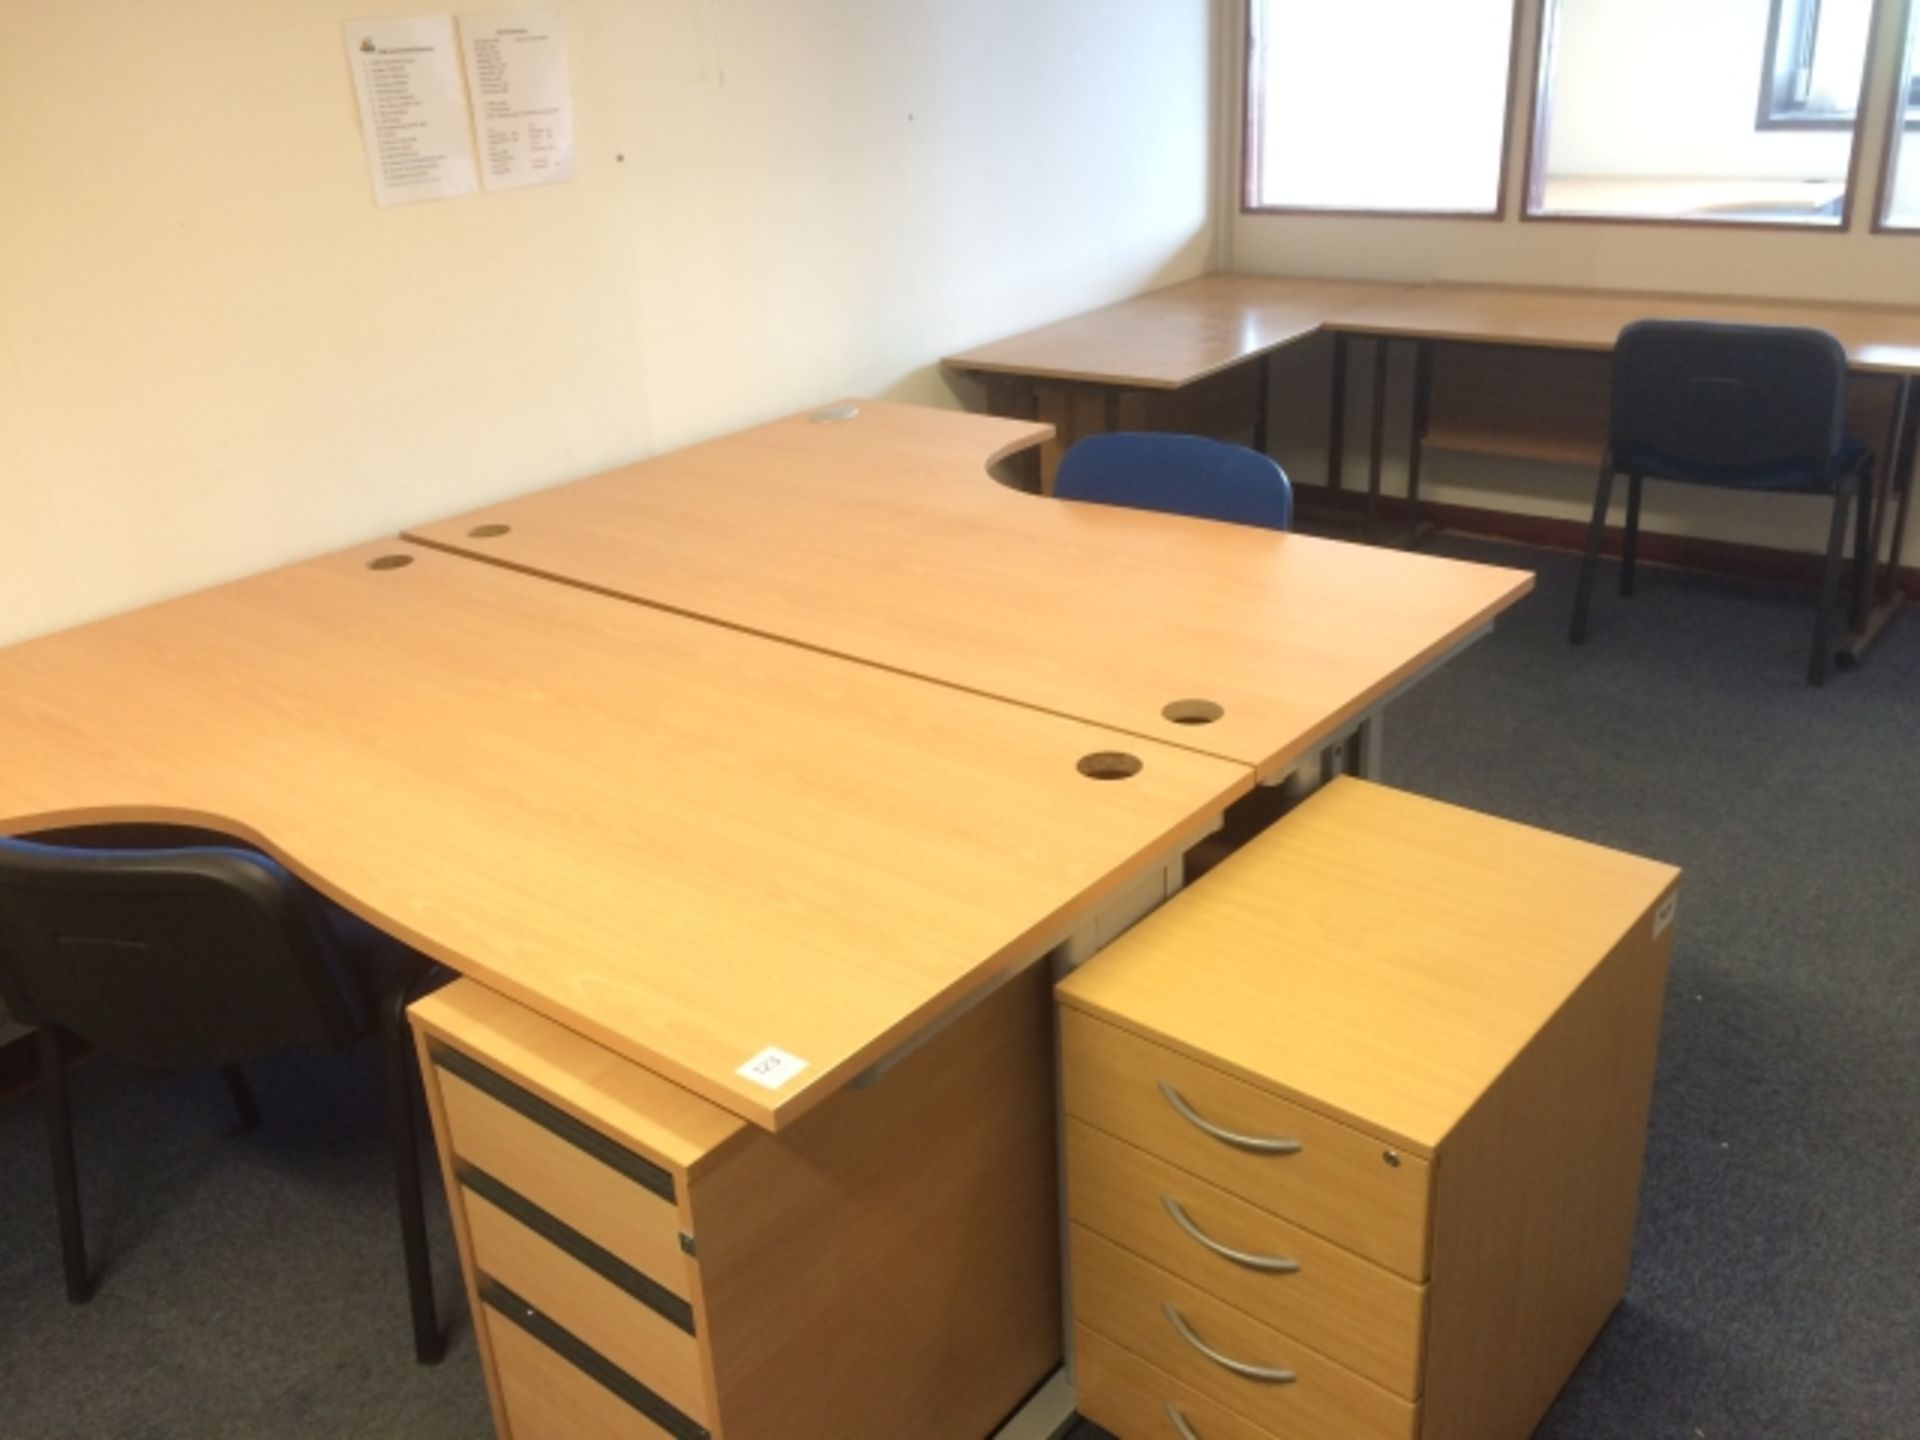 * Loose removable furniture to 1st floor office. 3 x  L-shaped desks, 3 x straight desks, 4 x drawer